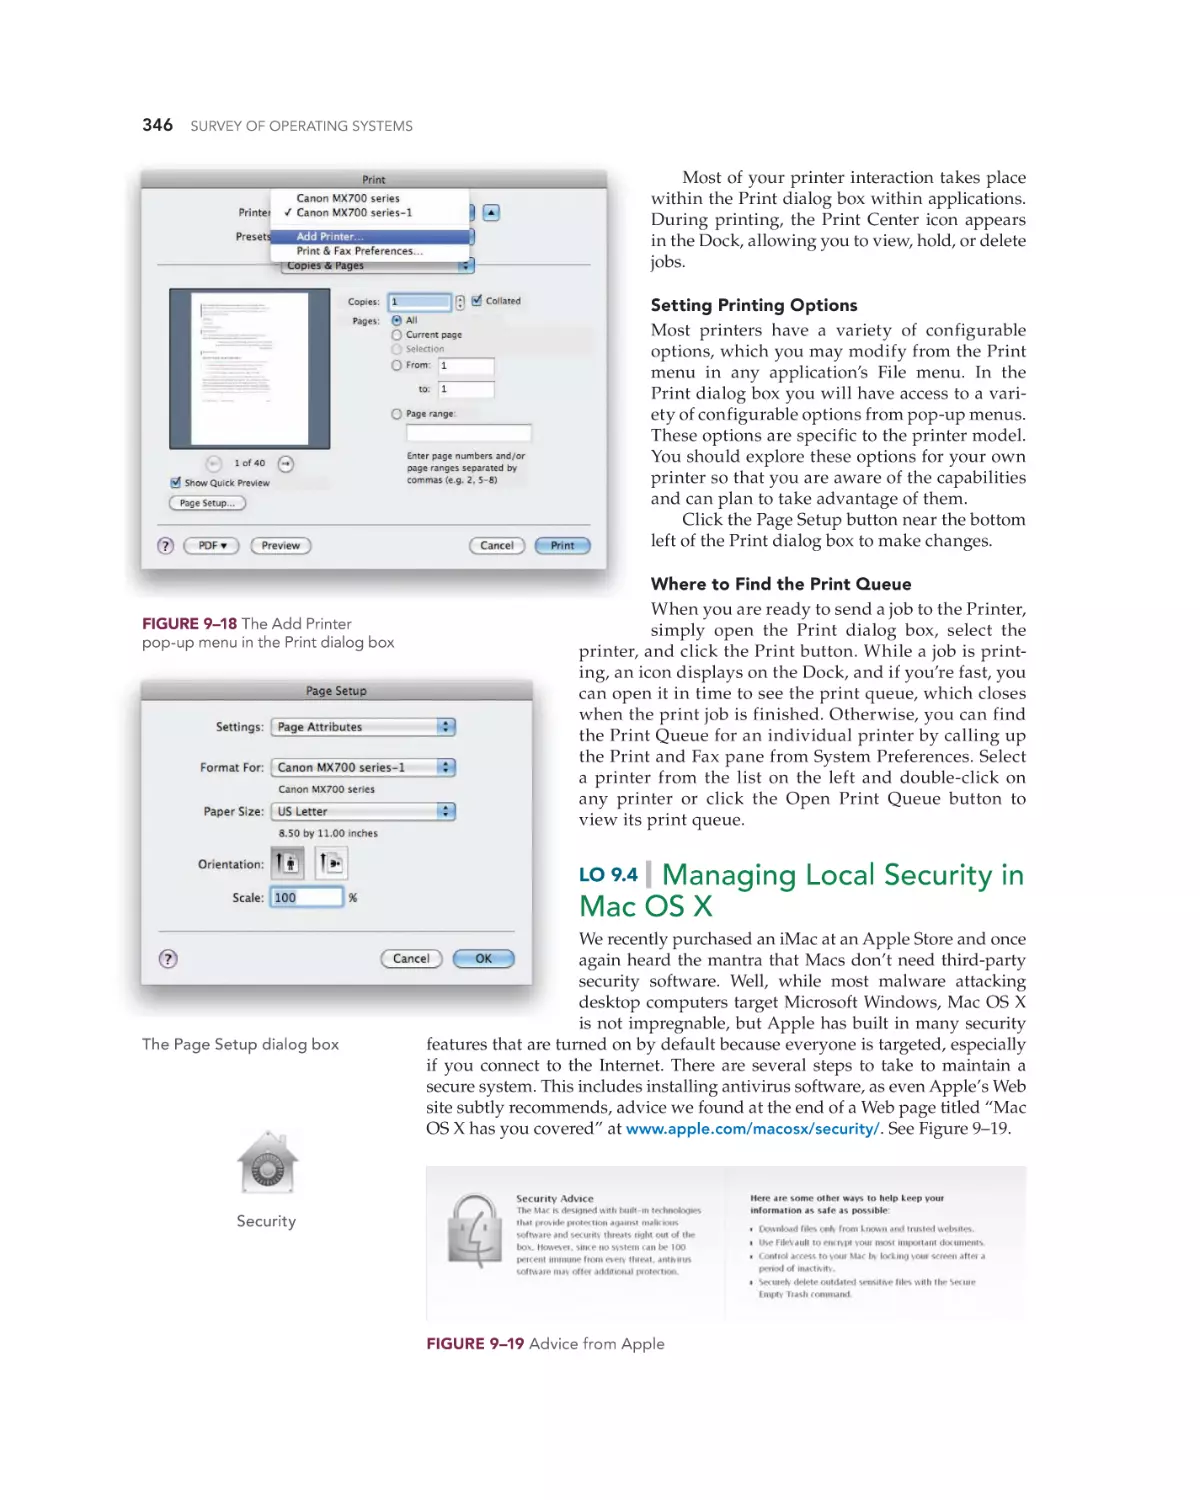 Managing Local Security in Mac OS X